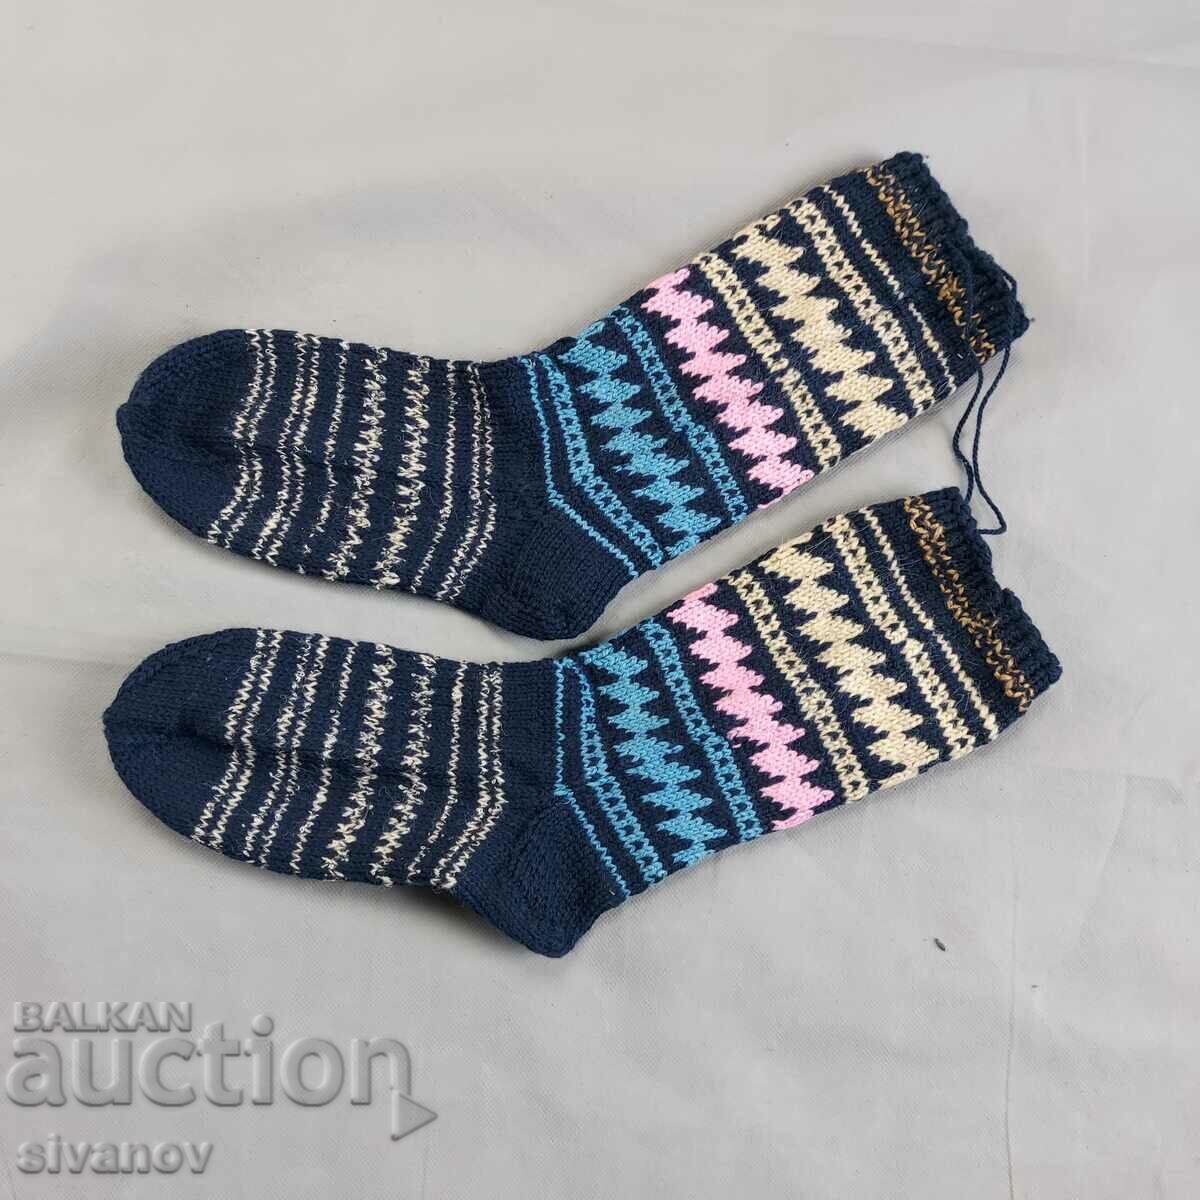 Wool socks for ethnic folklore costume #2354